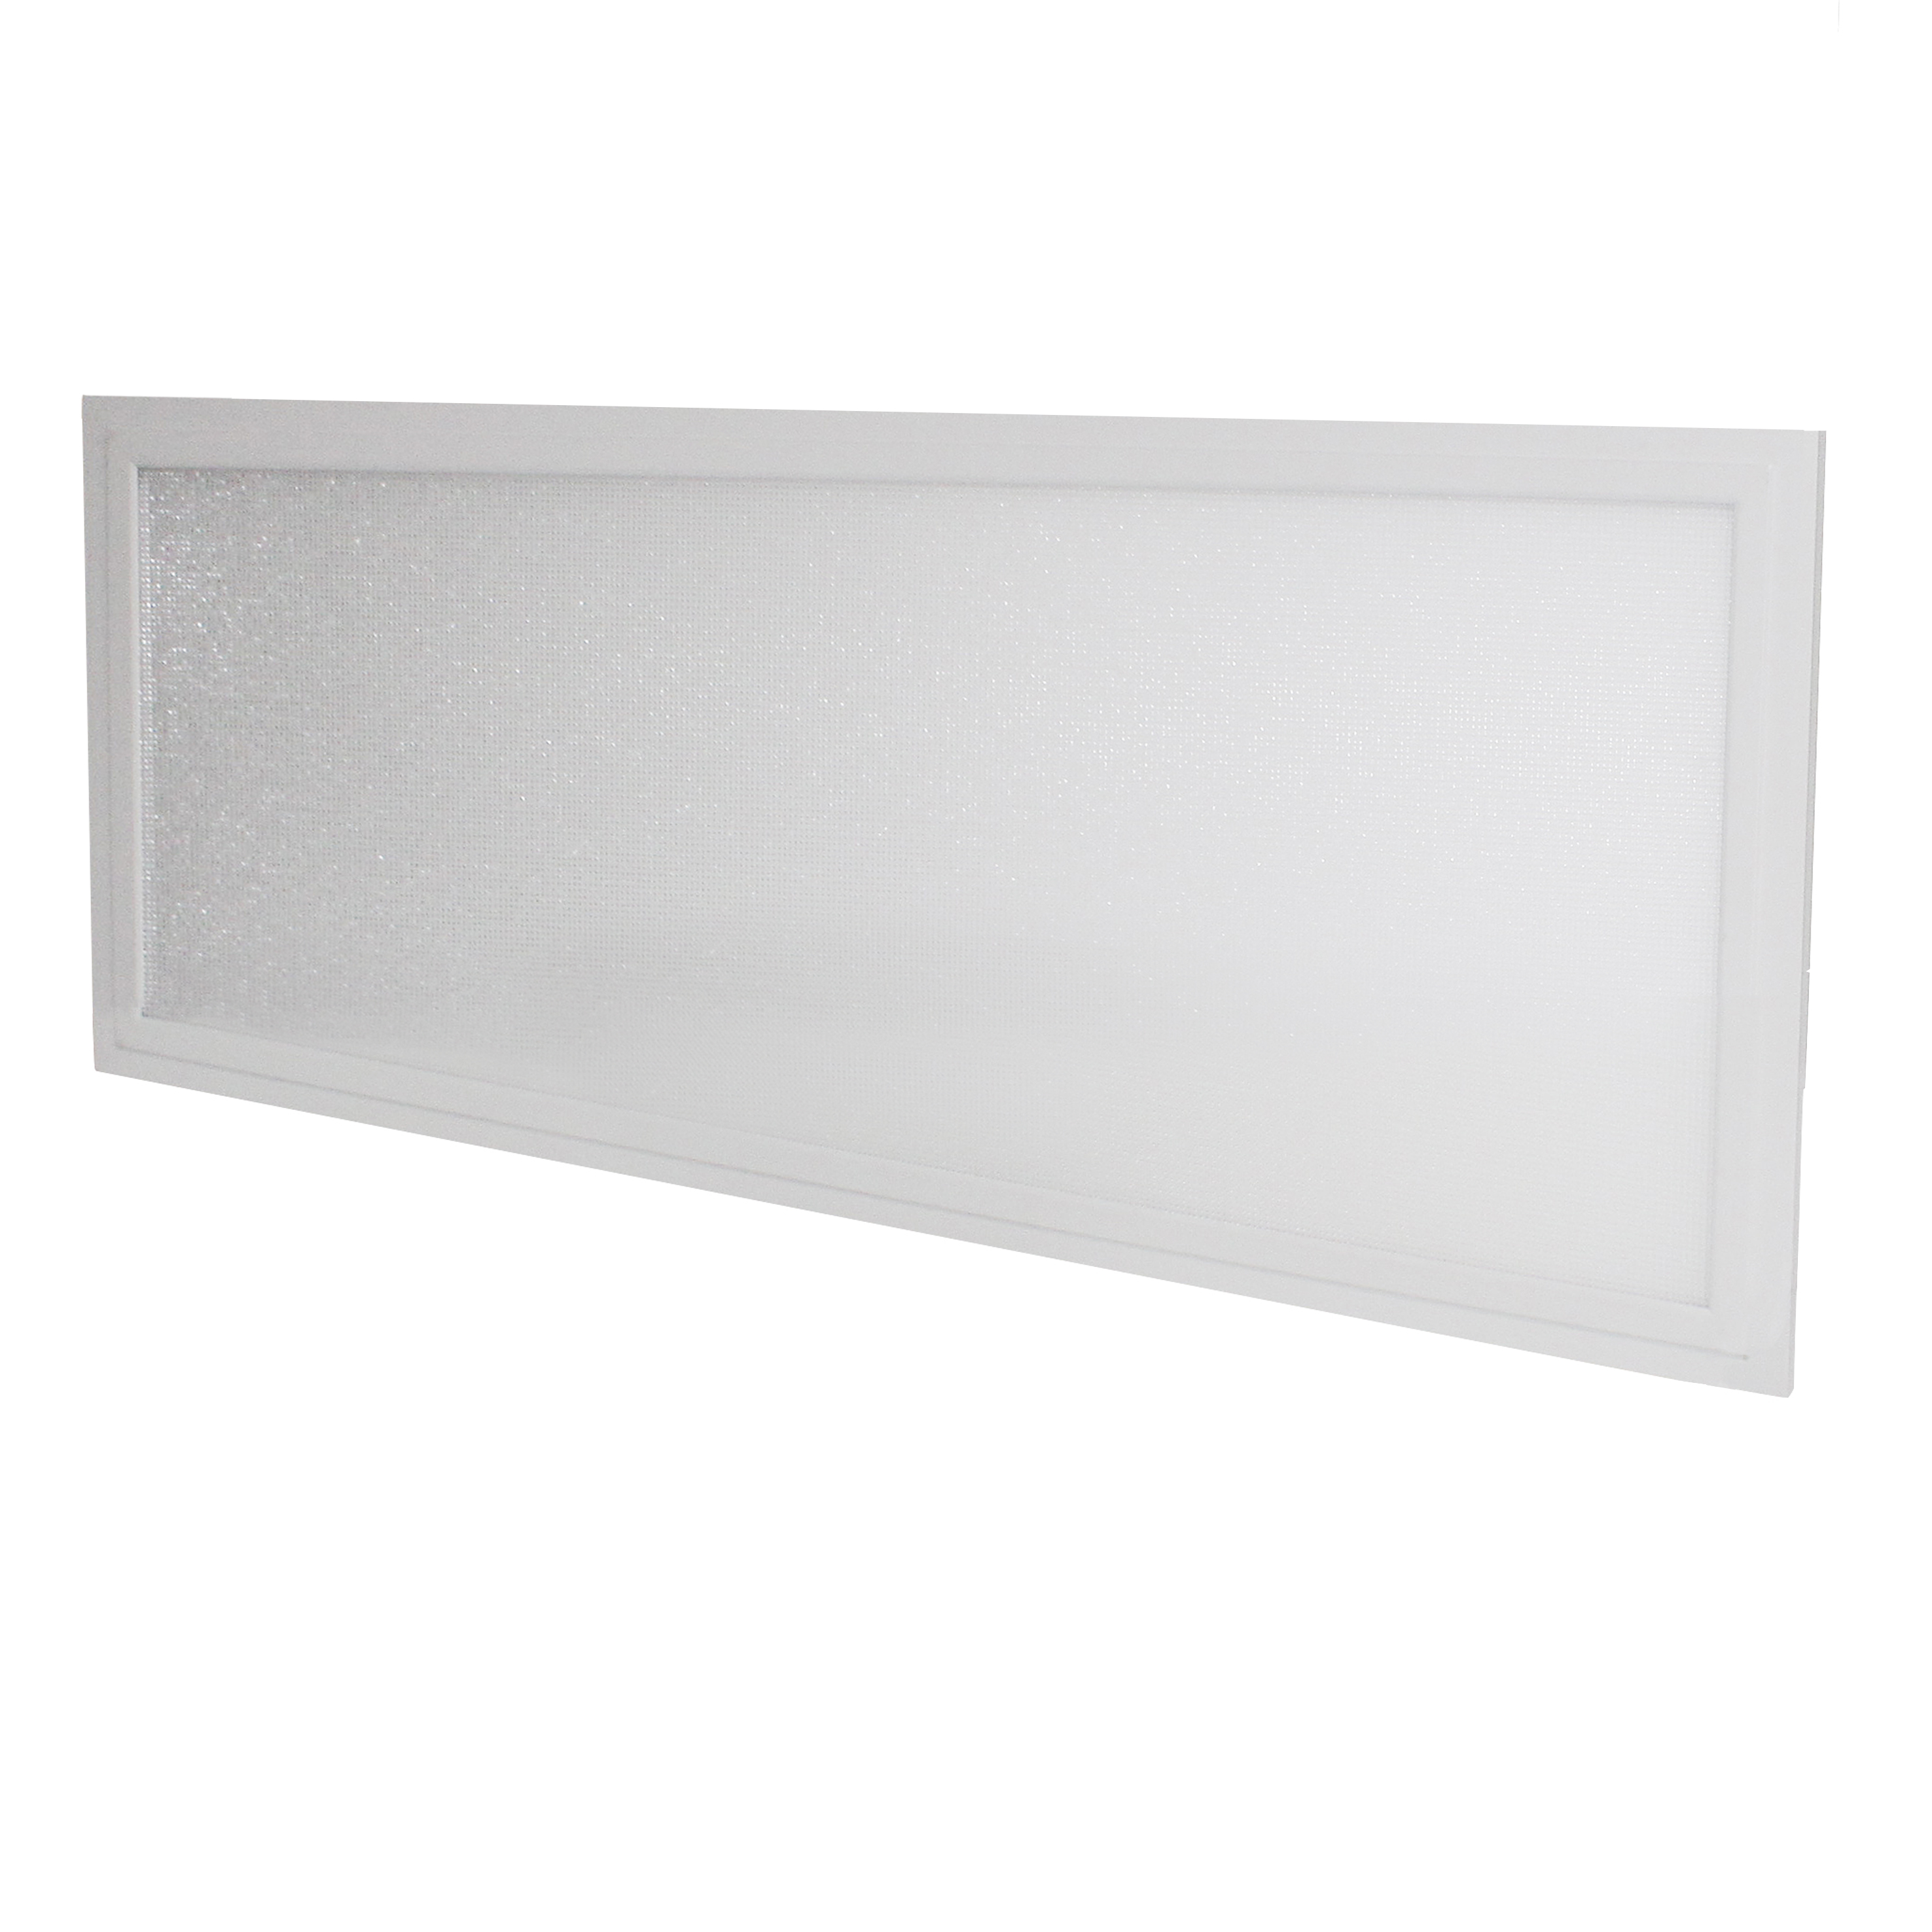 LED-Panel MULTI PROLine 50 - 75 W weiß tageslichtweiß 860 1.245 x 618 x 11 mm